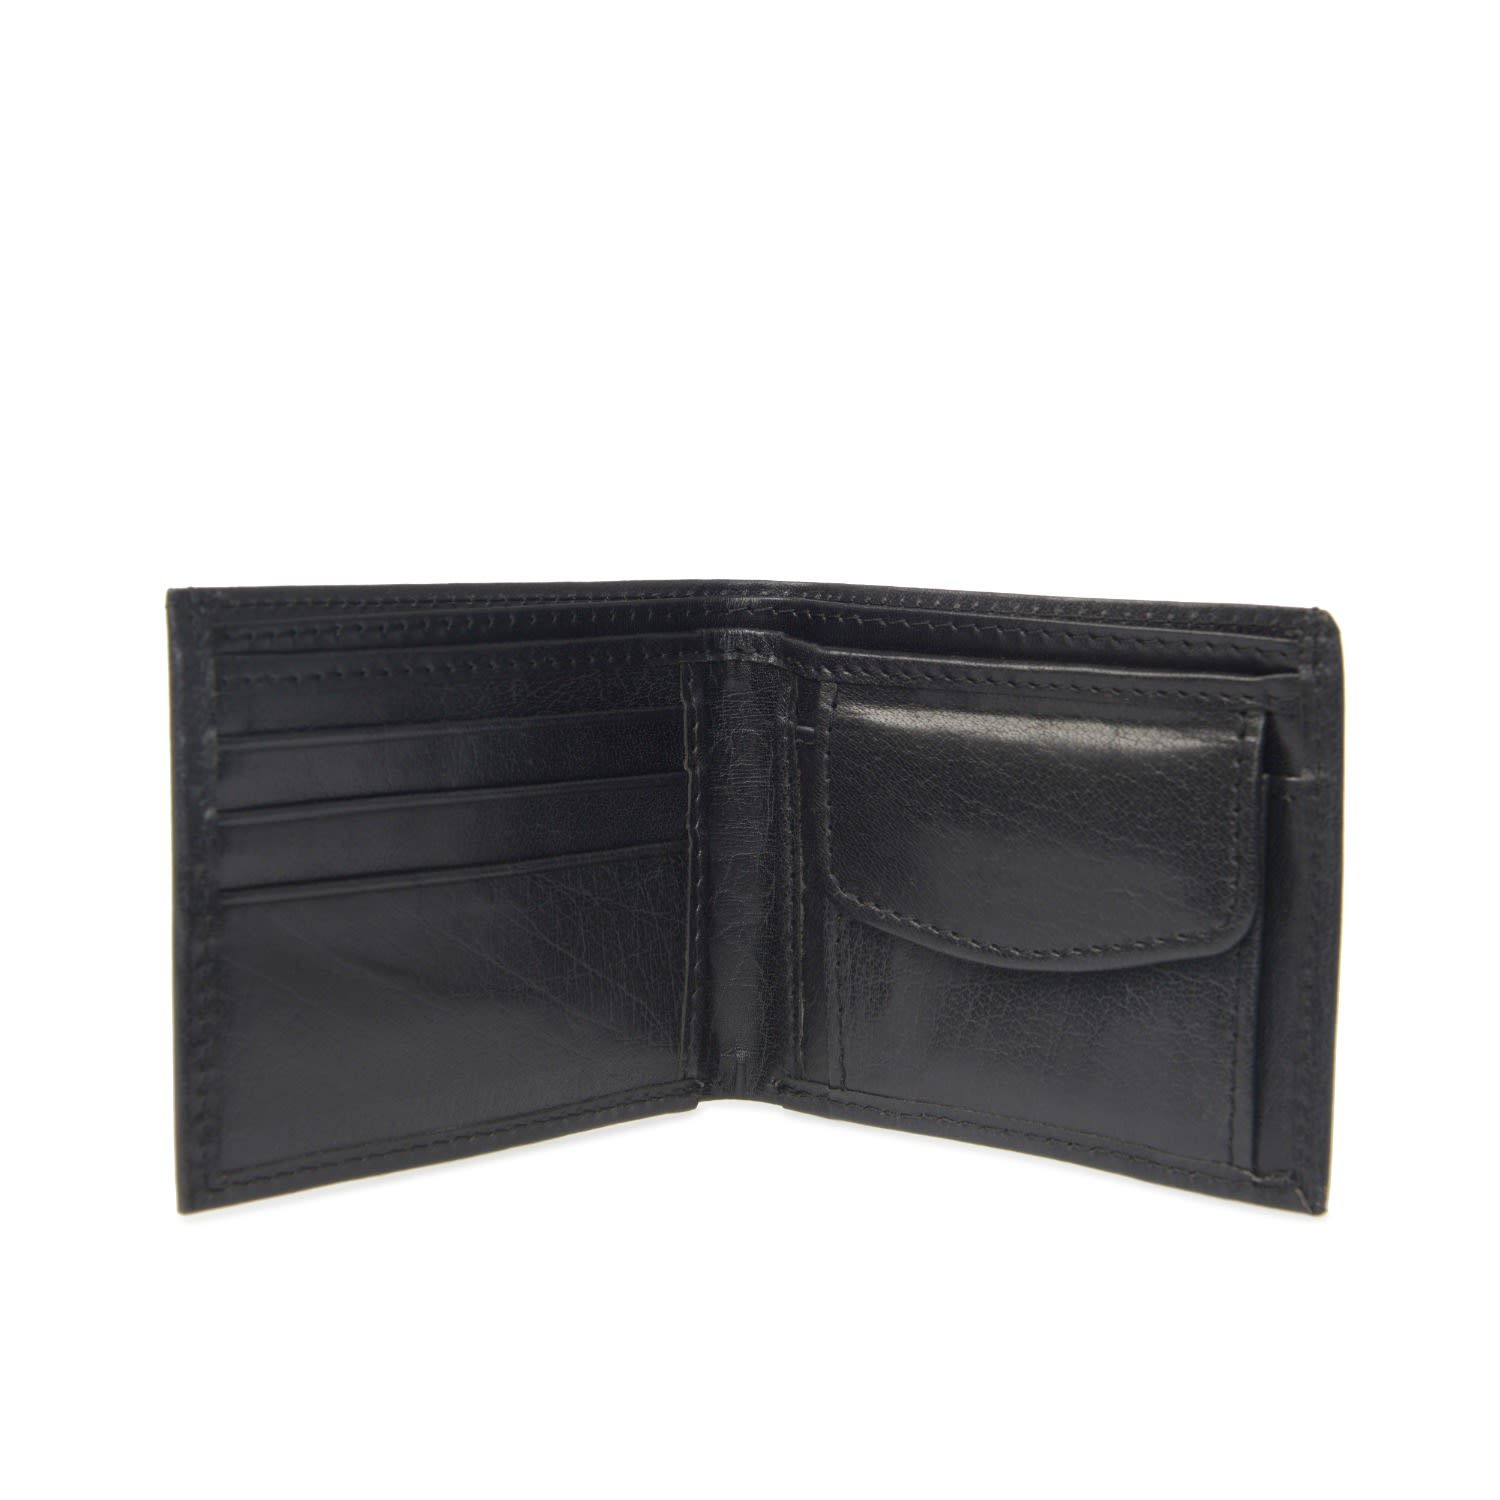 Men’s Classic Black Leather Wallet With Coin Pocket Vida Vida